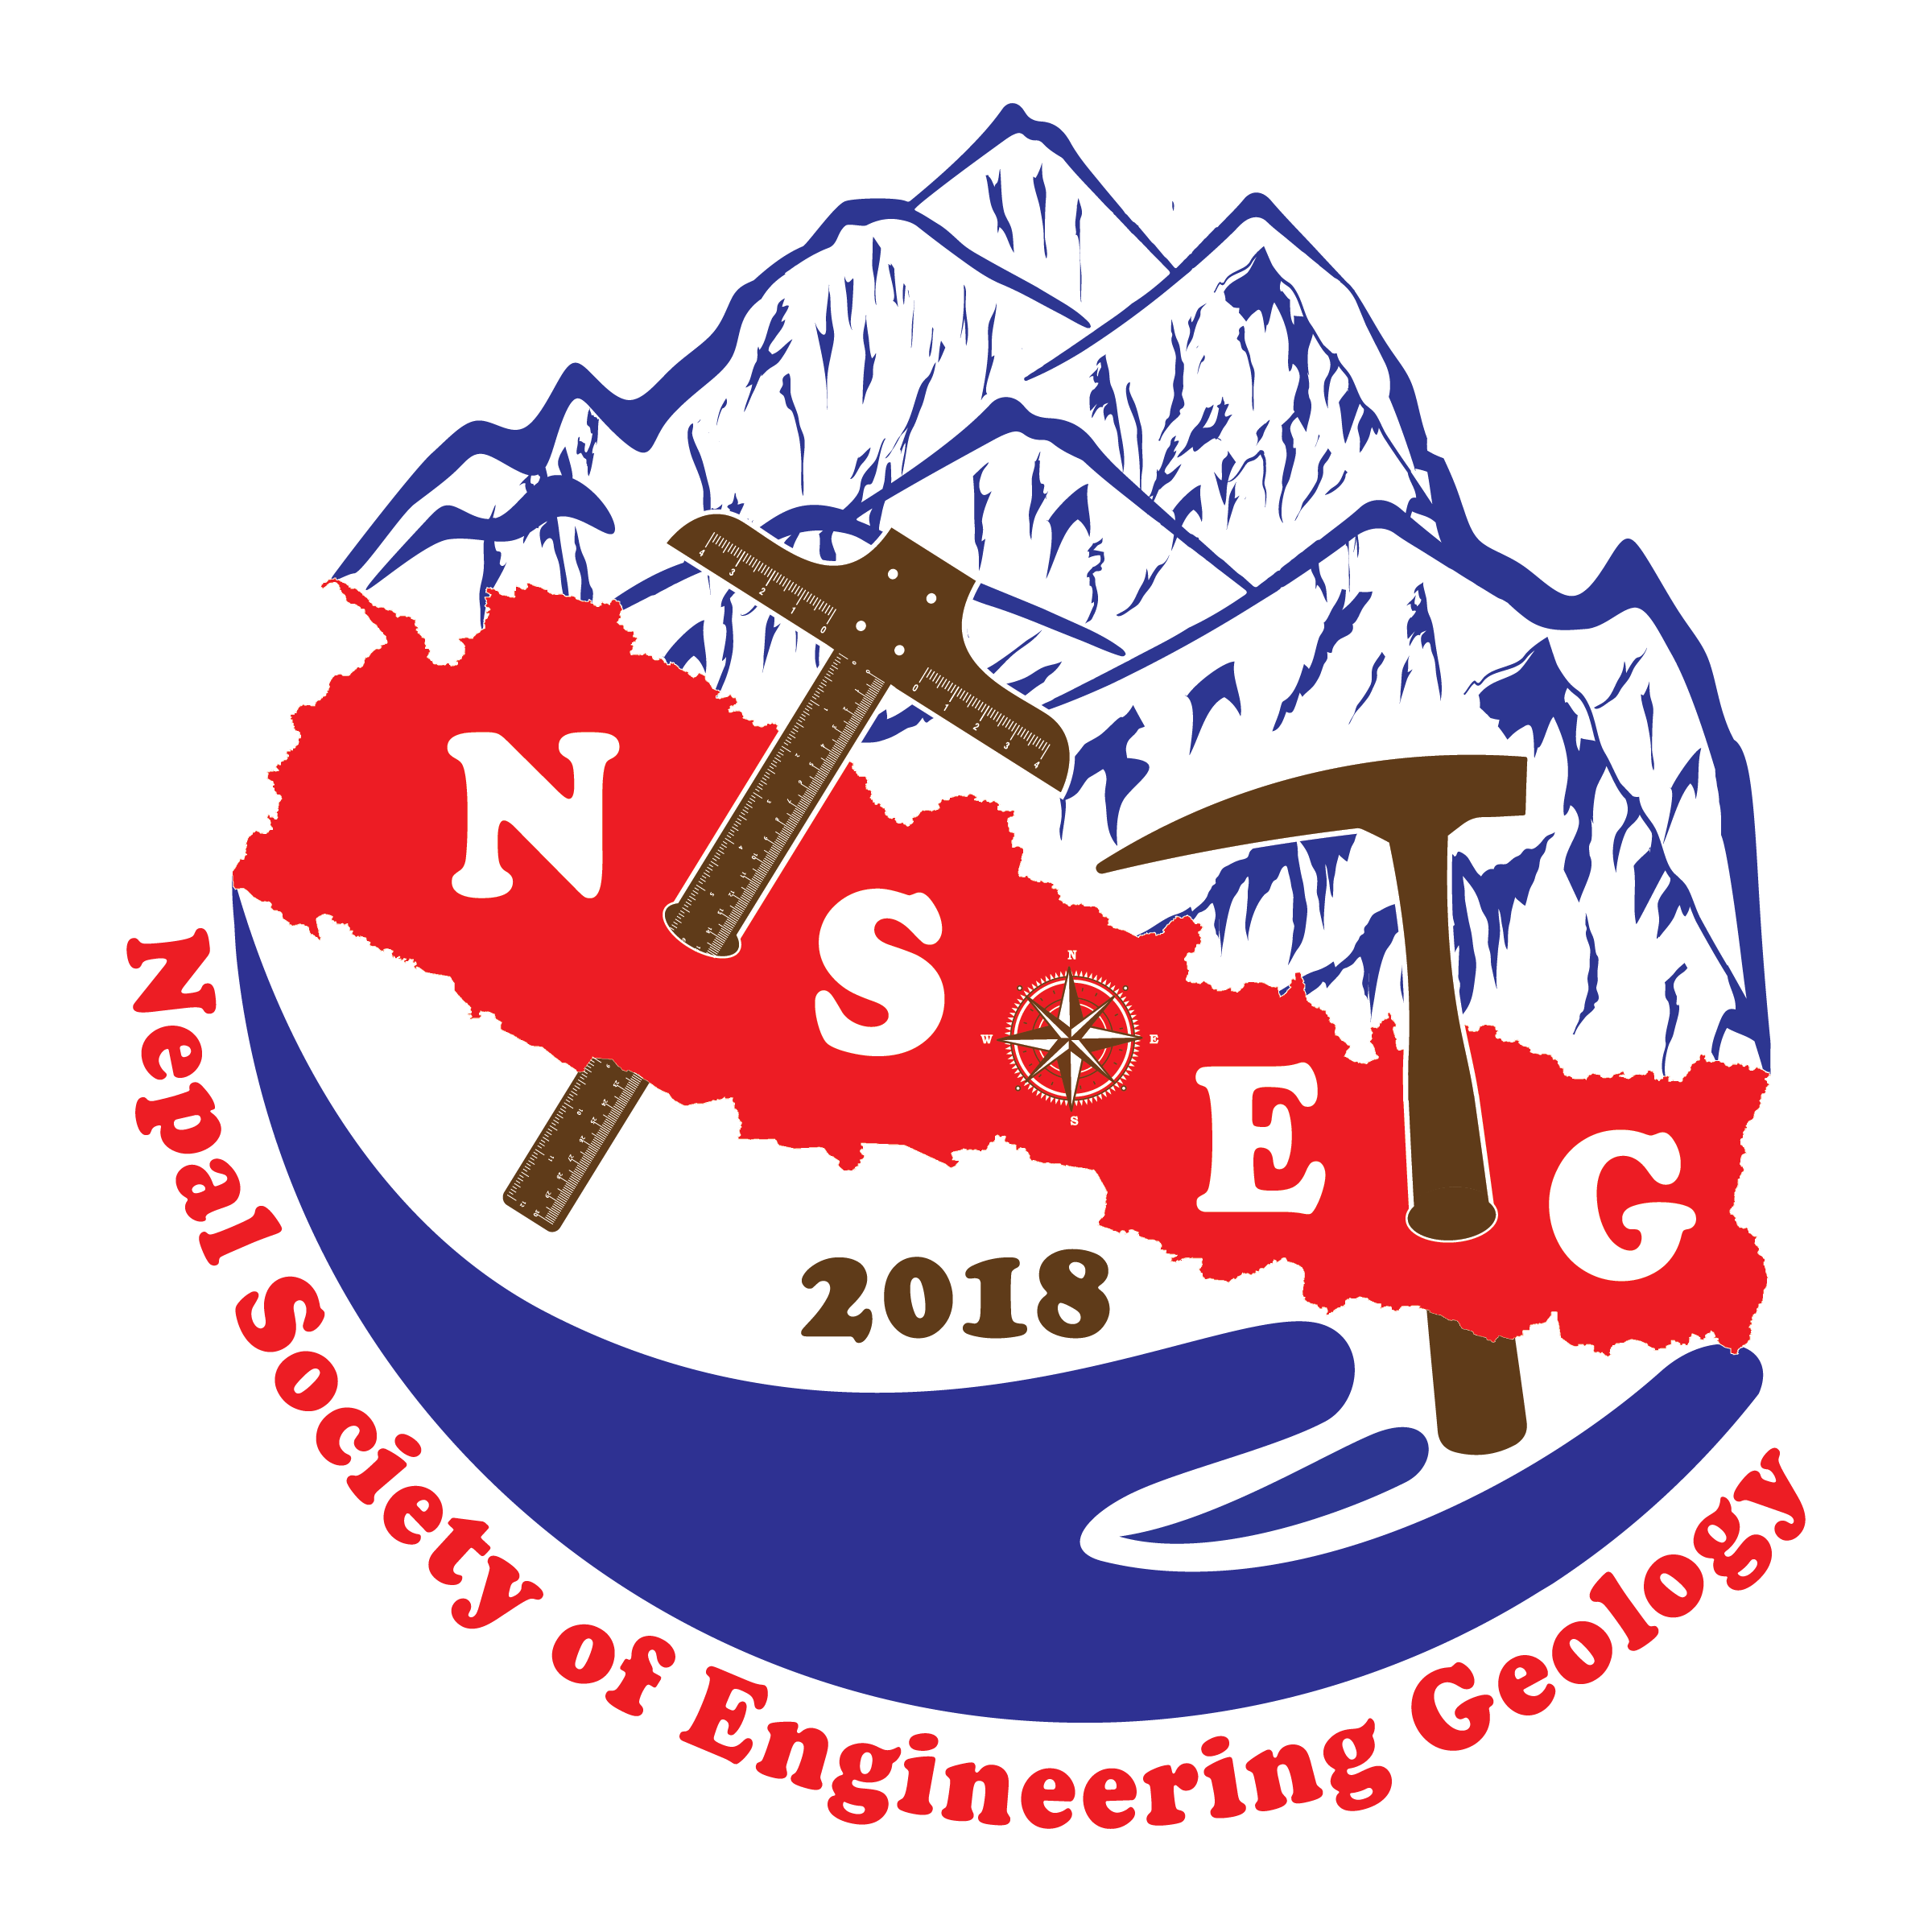 Nepal Society of Engineering Geology